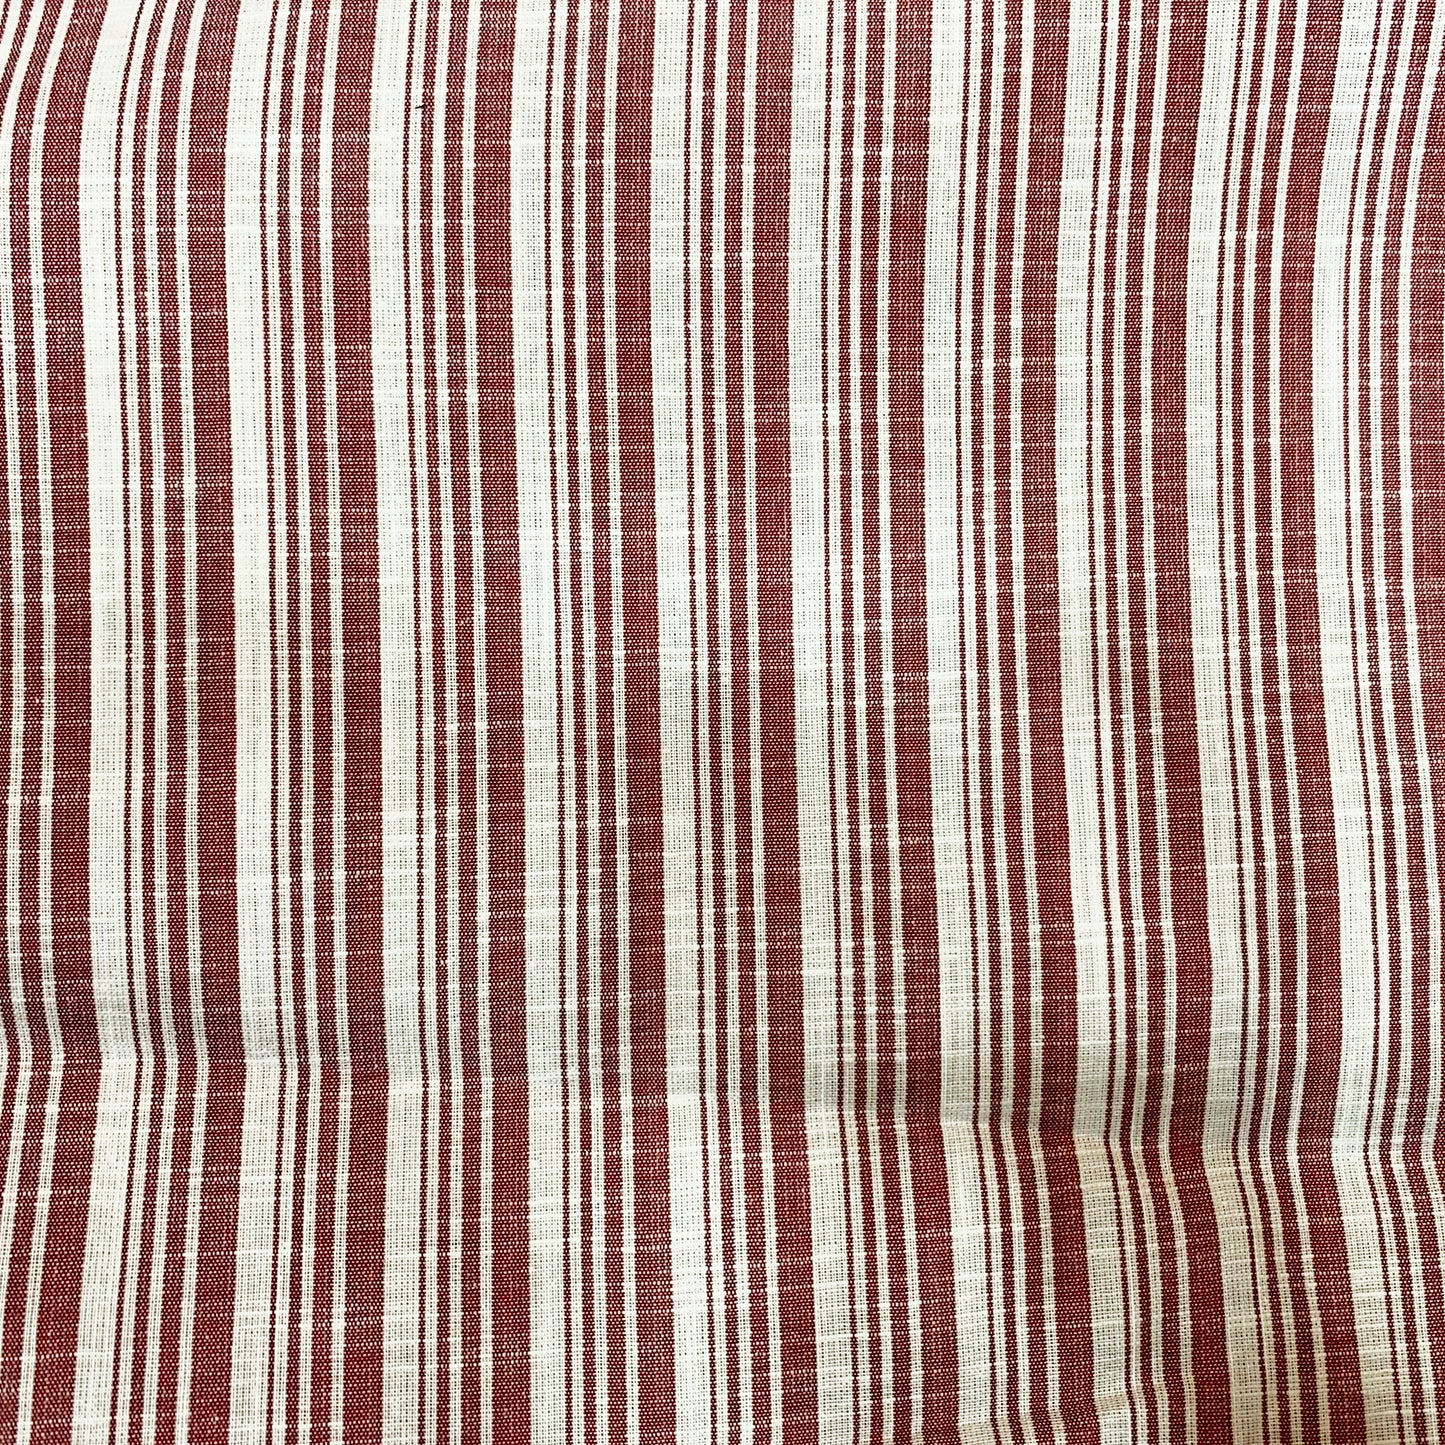 Maroon Striped Cotton Fabric